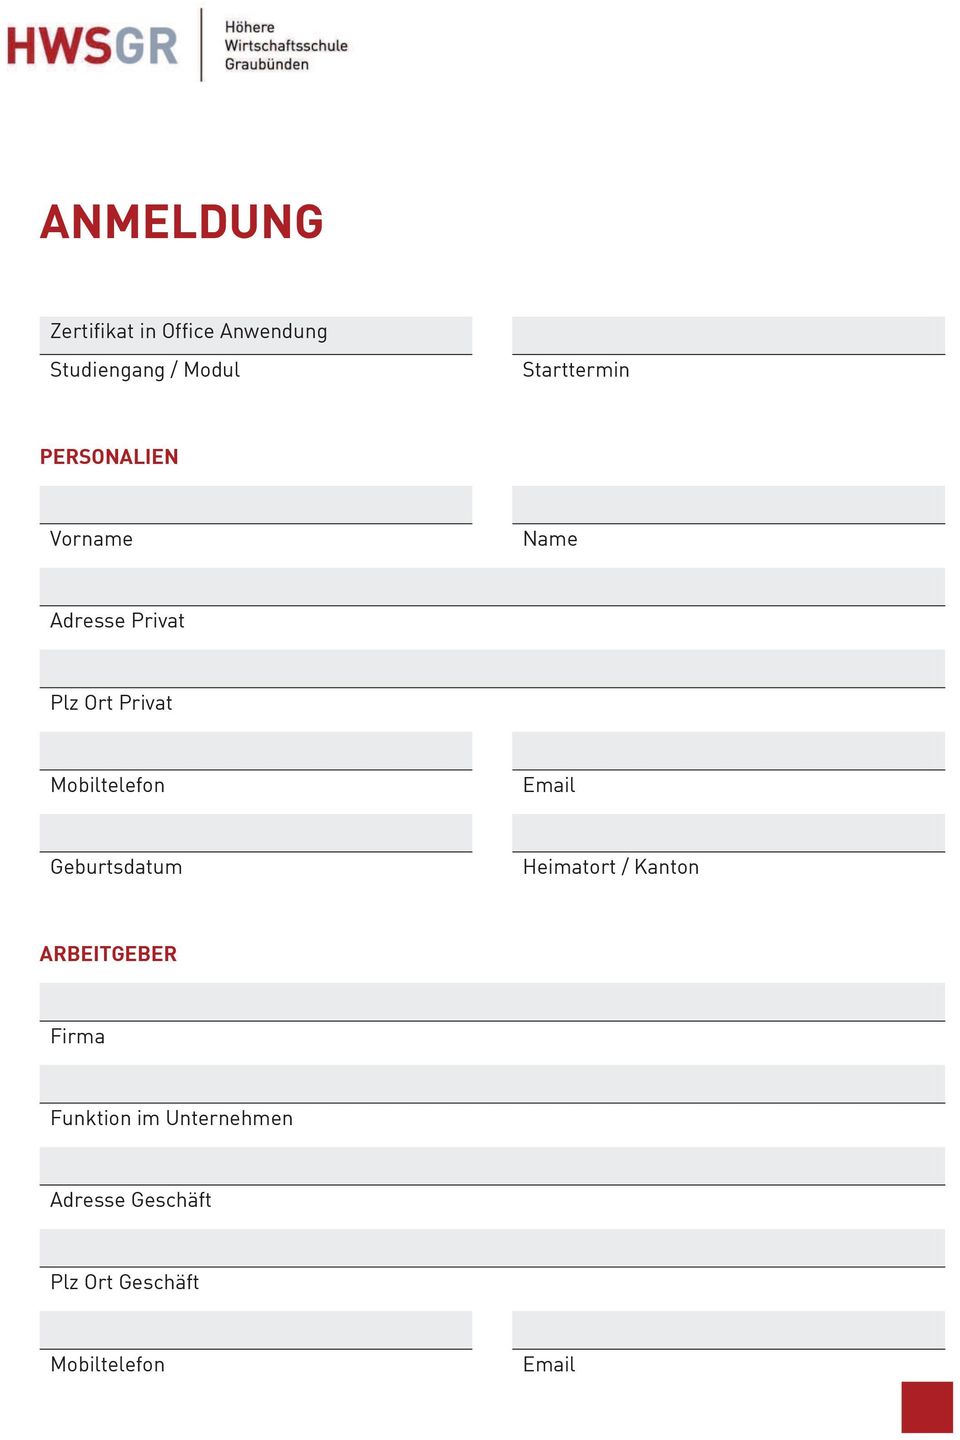 Mobiltelefon Email Geburtsdatum Heimatort / Kanton ARBEITGEBER Firma